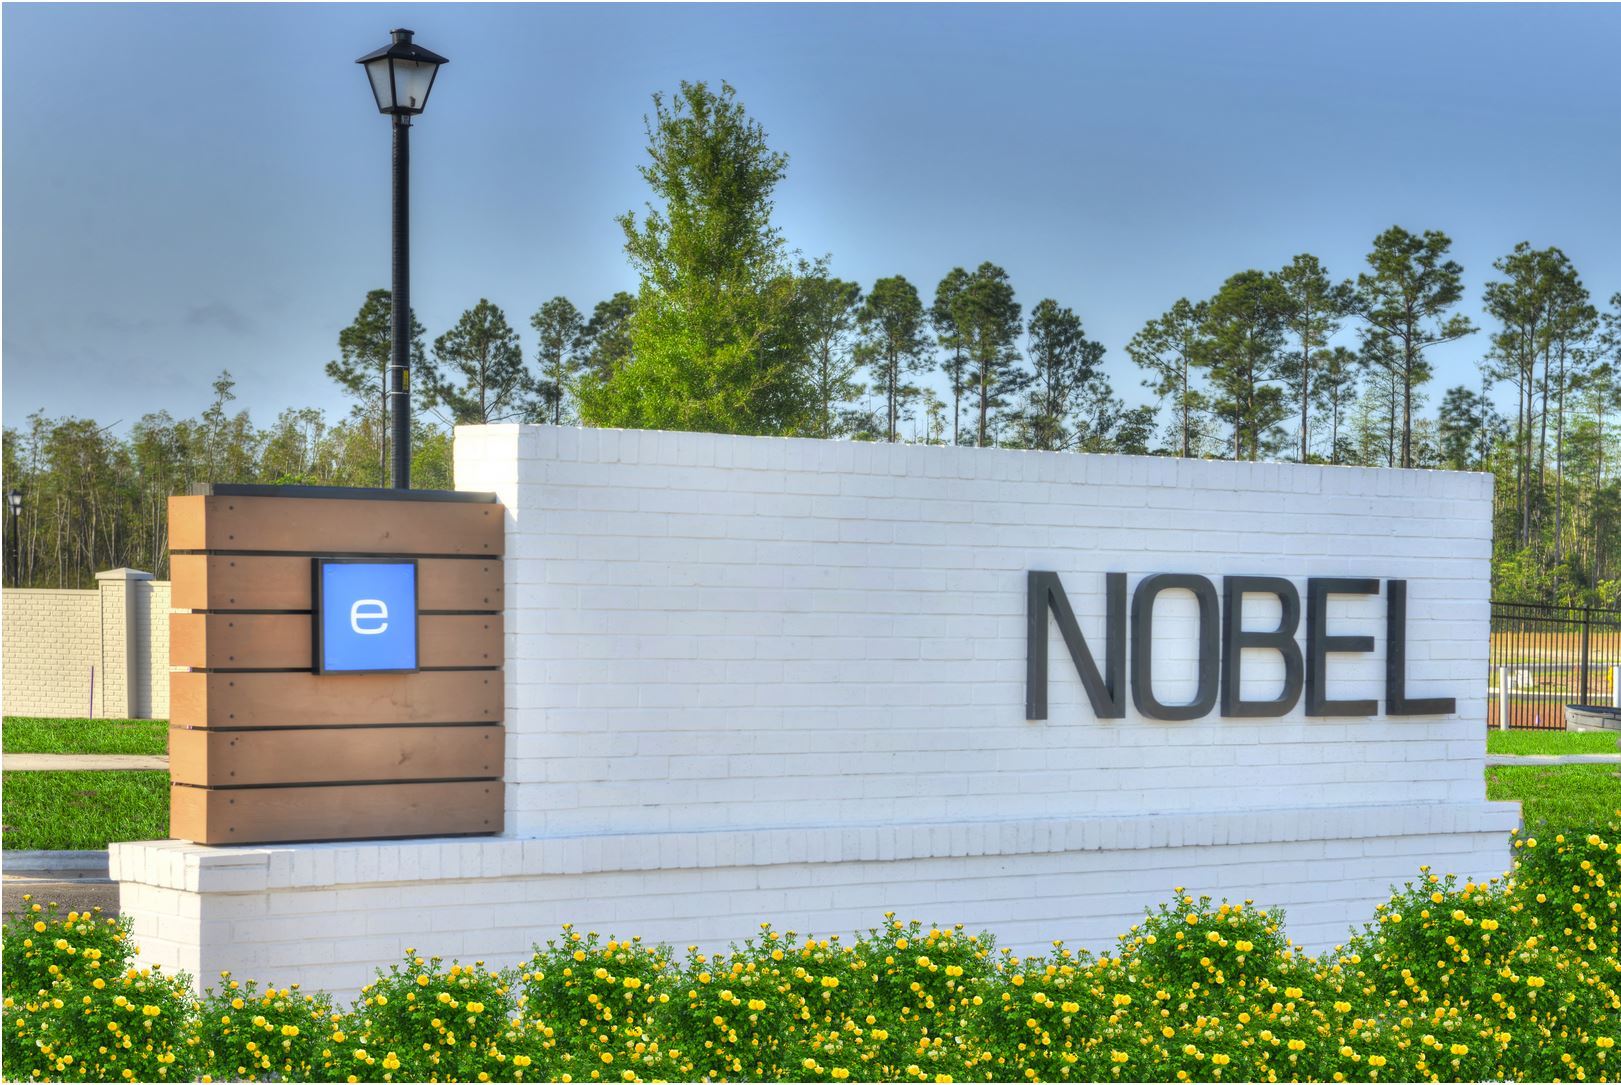 Nobel at Etown Entrance Sign to Homes For Sale